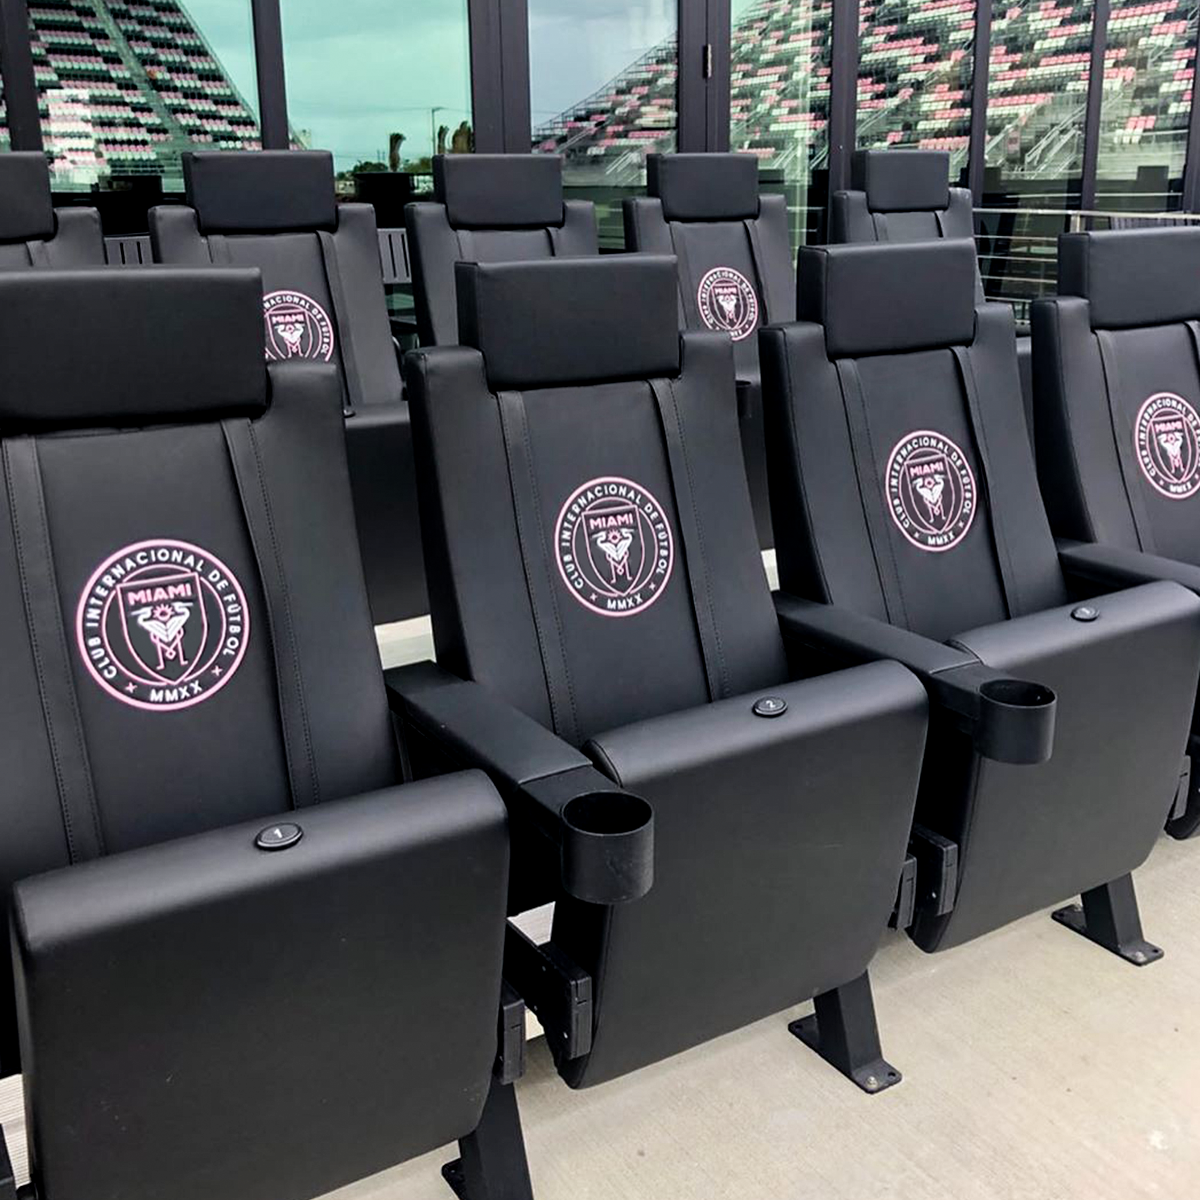 SuiteMax 3.5 VIP Seats with Washington Nationals 2019 Champions Logo